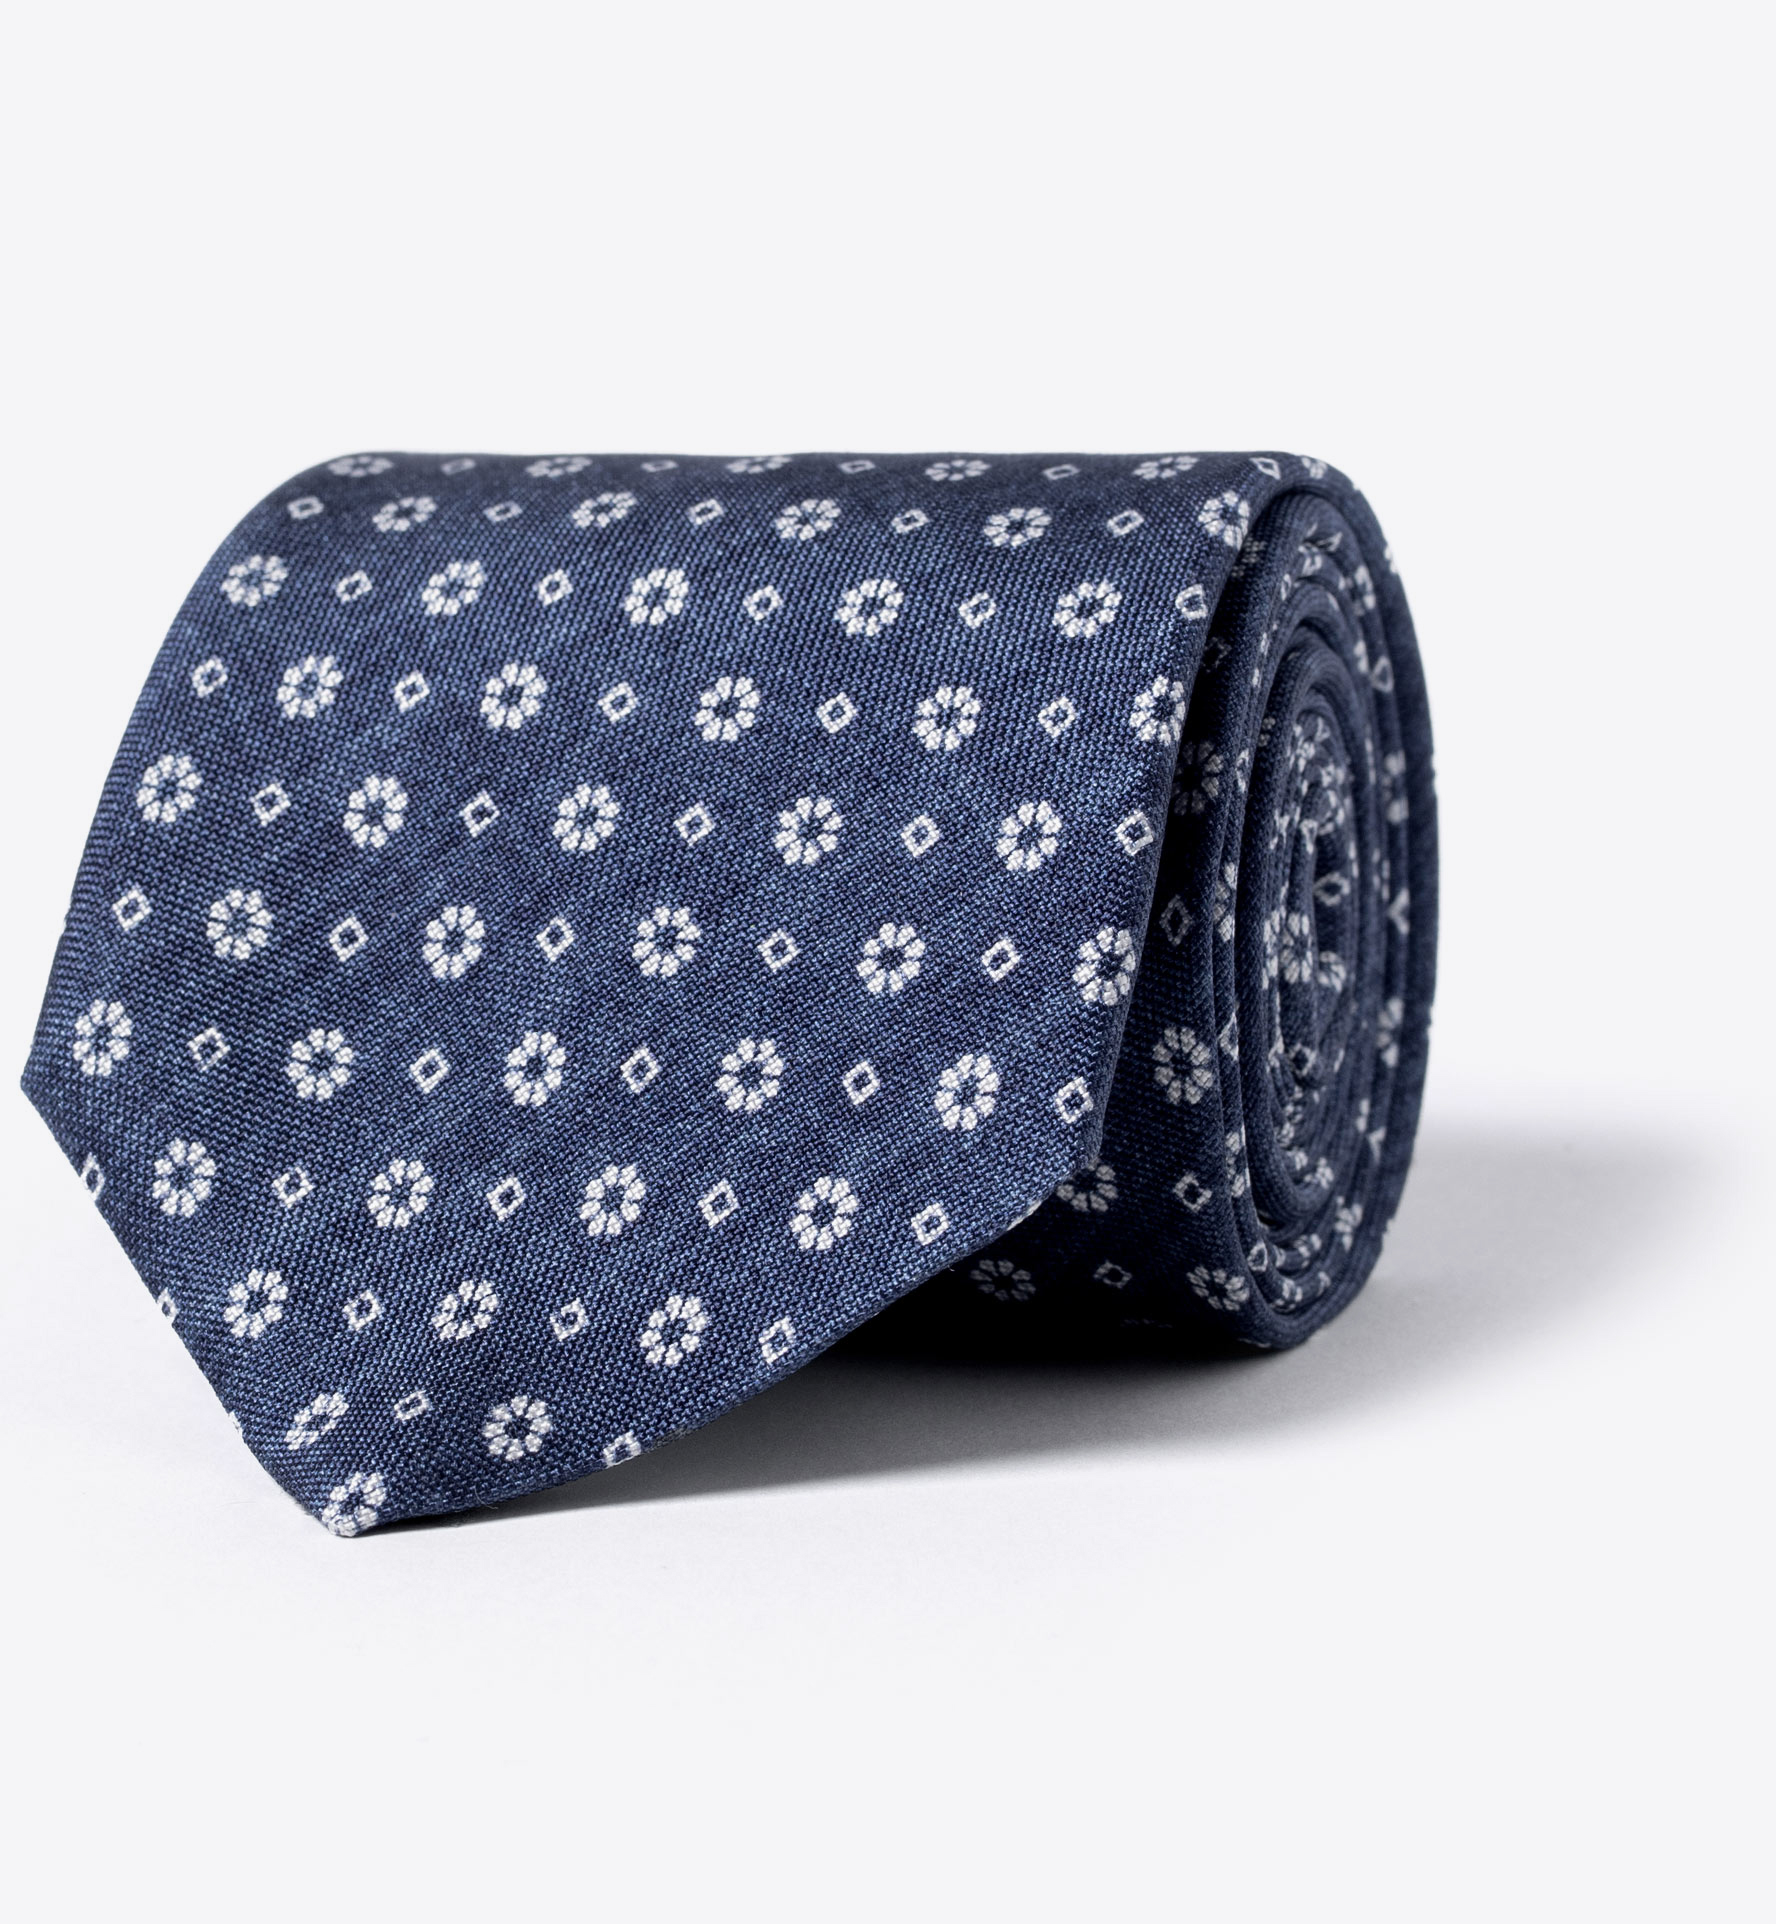 Faded Navy Foulard Print Silk Tie by Proper Cloth